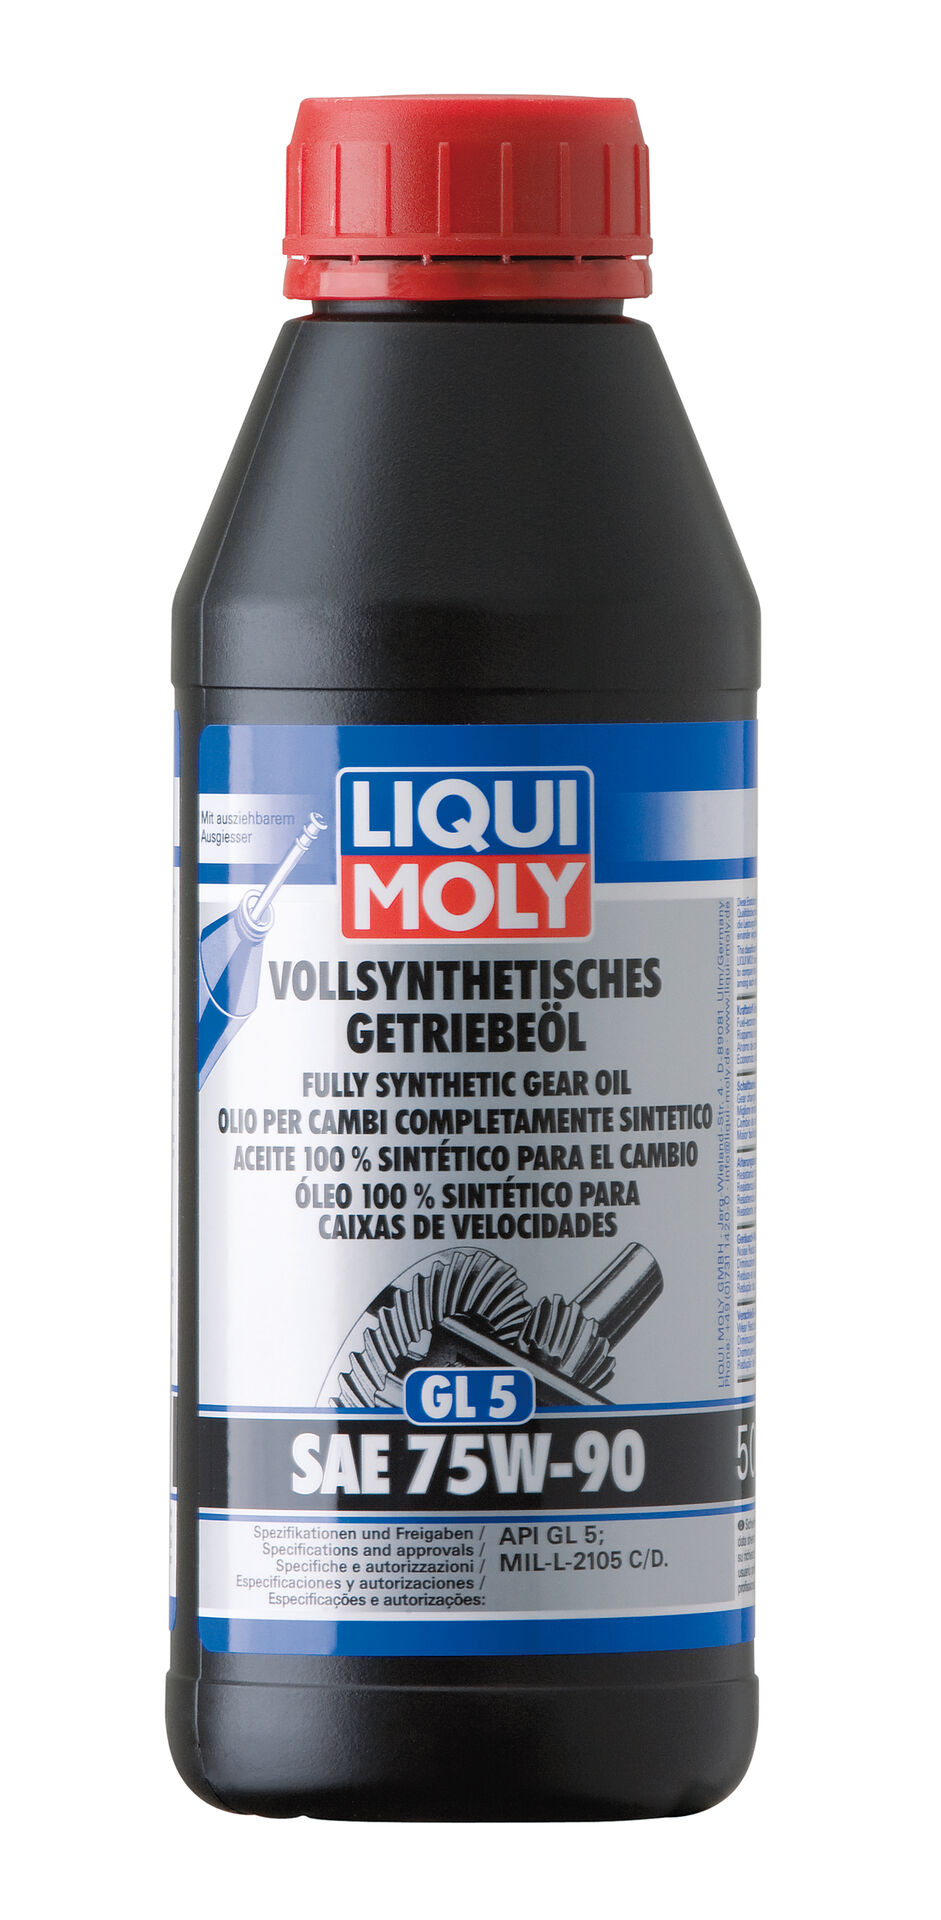 Liqui Moly Vollsynthetisches Getriebeöl (GL5) SAE 75W-90 Gear Oil 500 ml